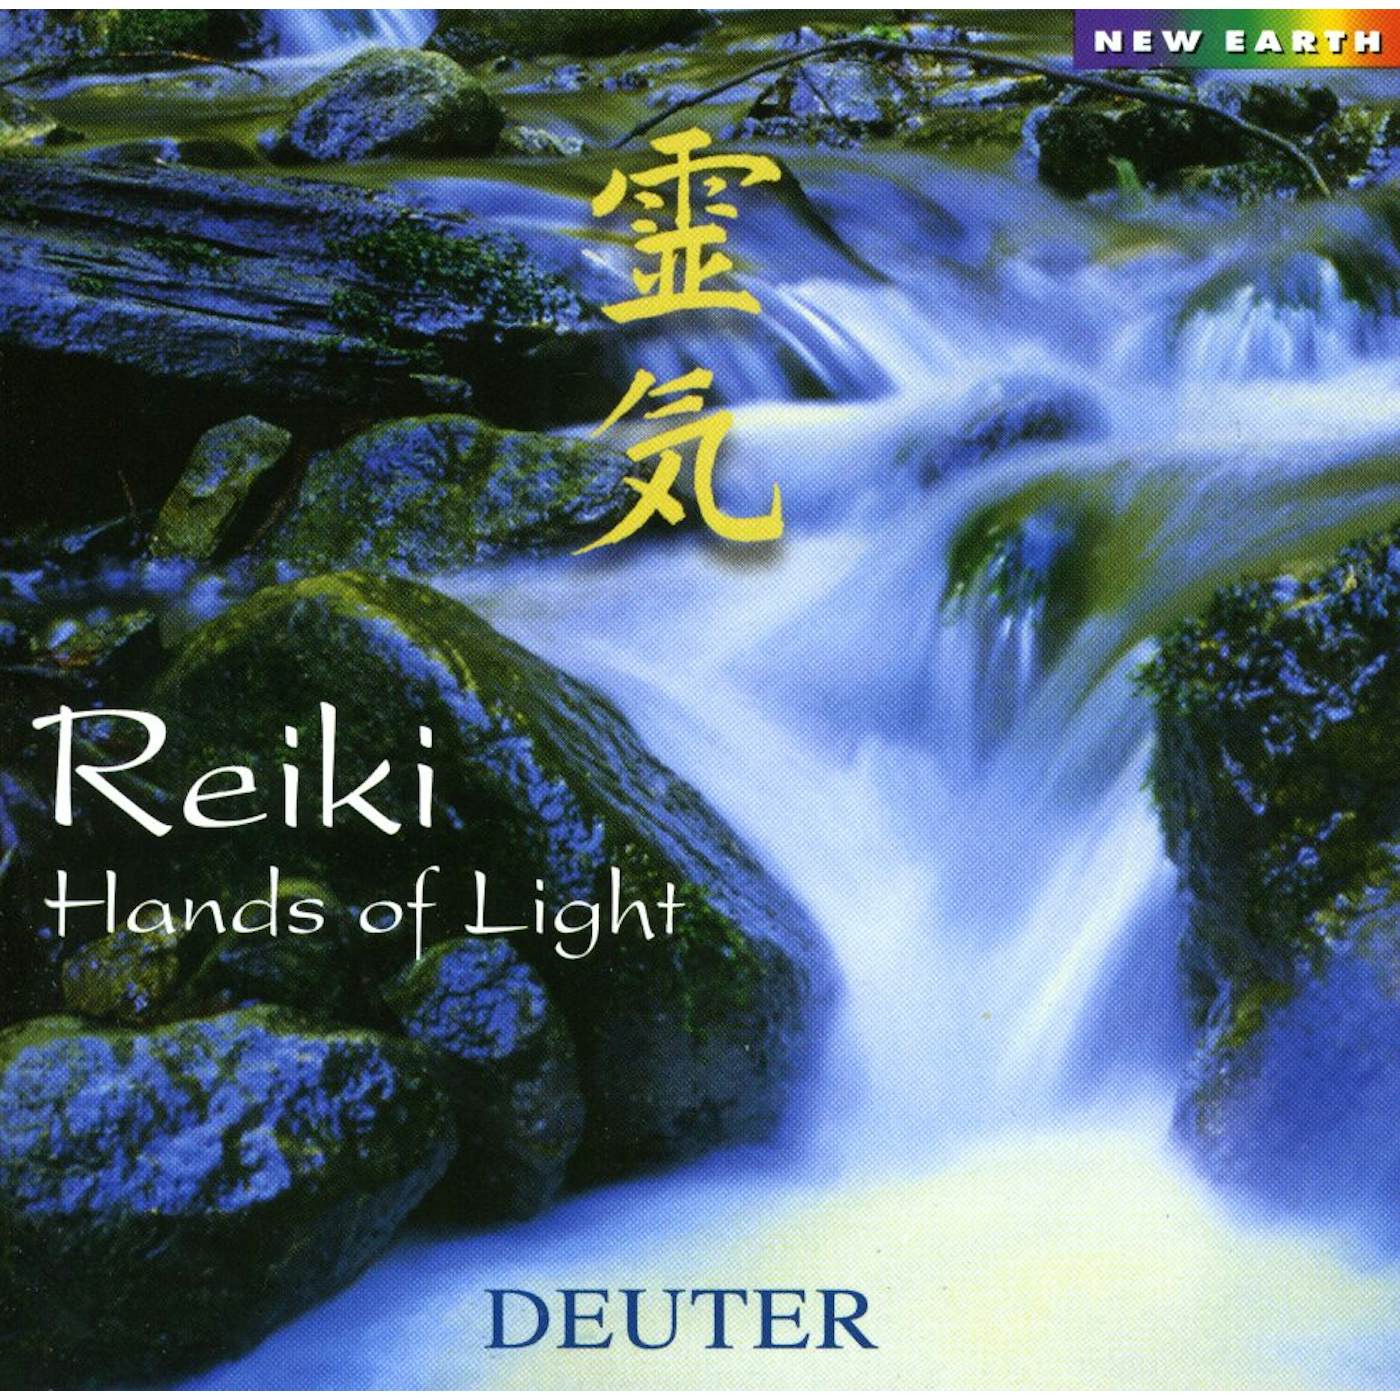 Deuter REIKI HANDS OF LIGHT CD